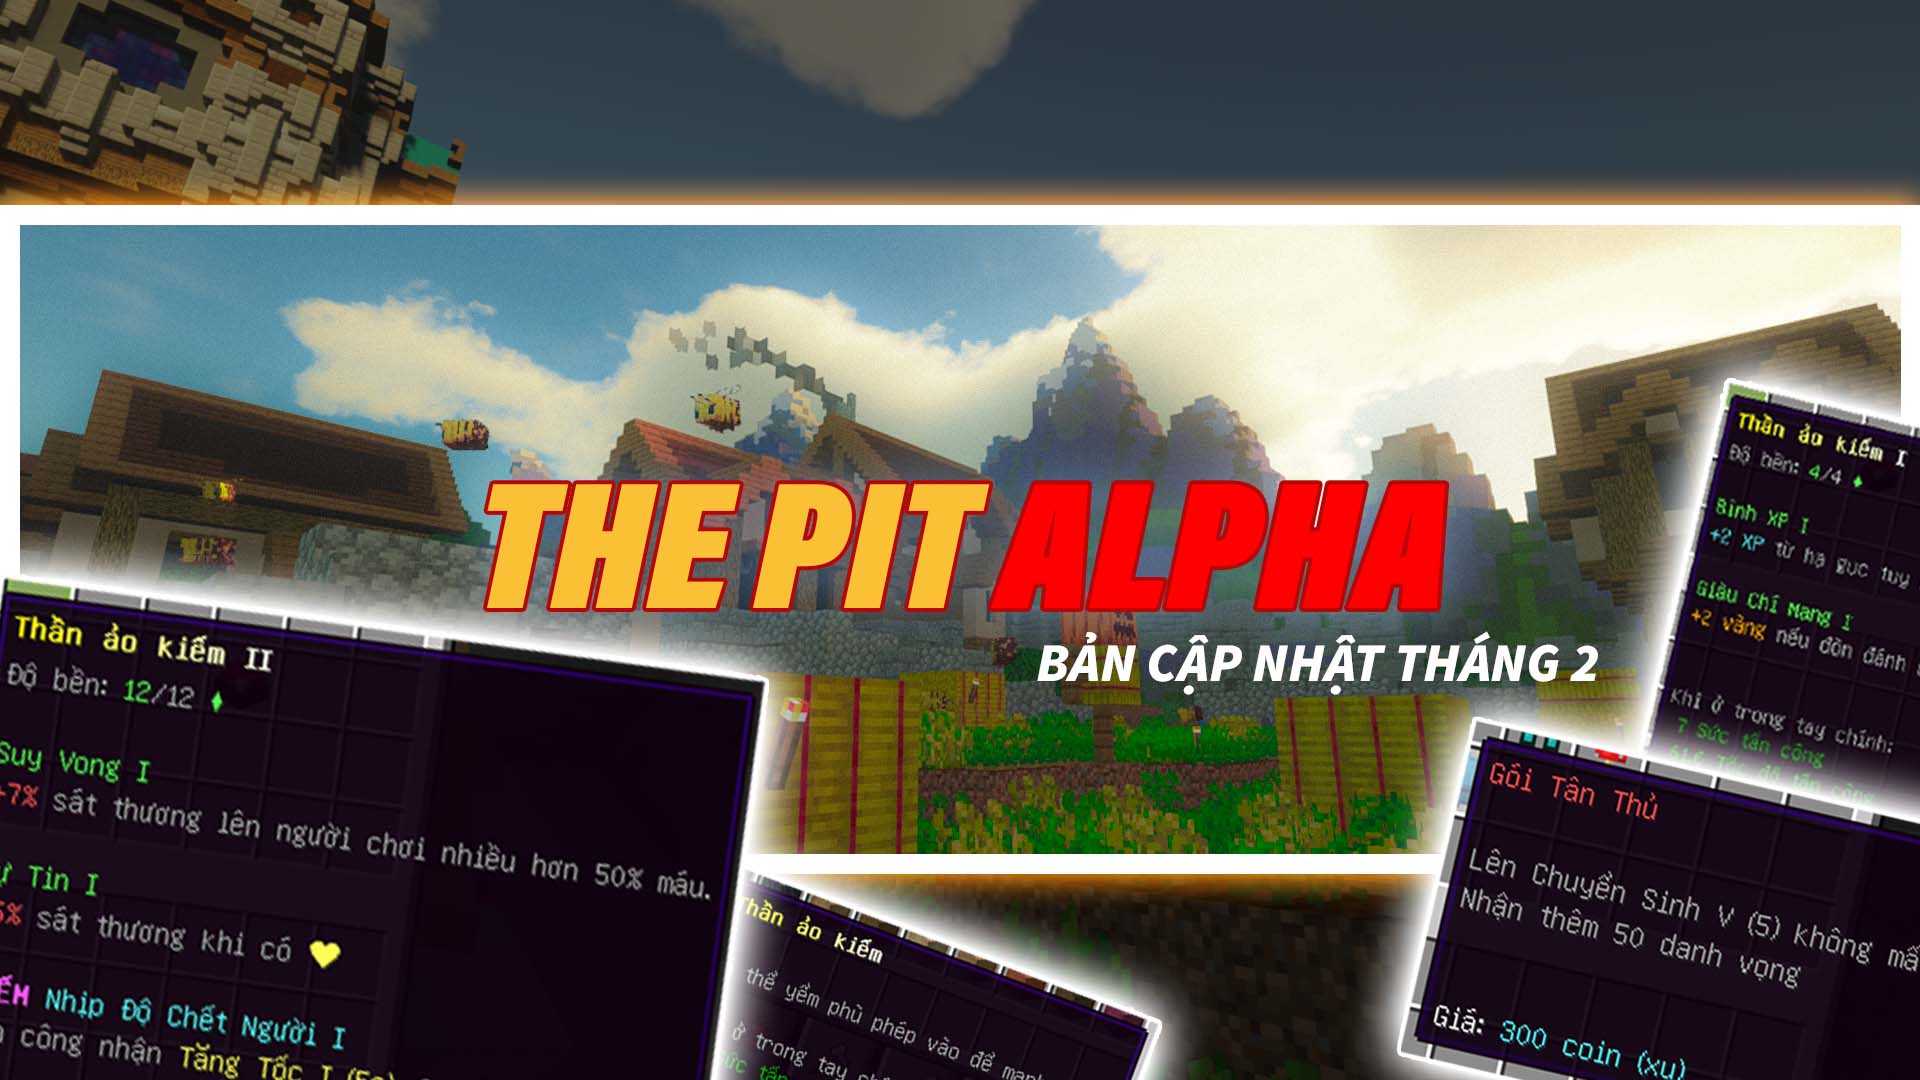 The Pit alpha 2